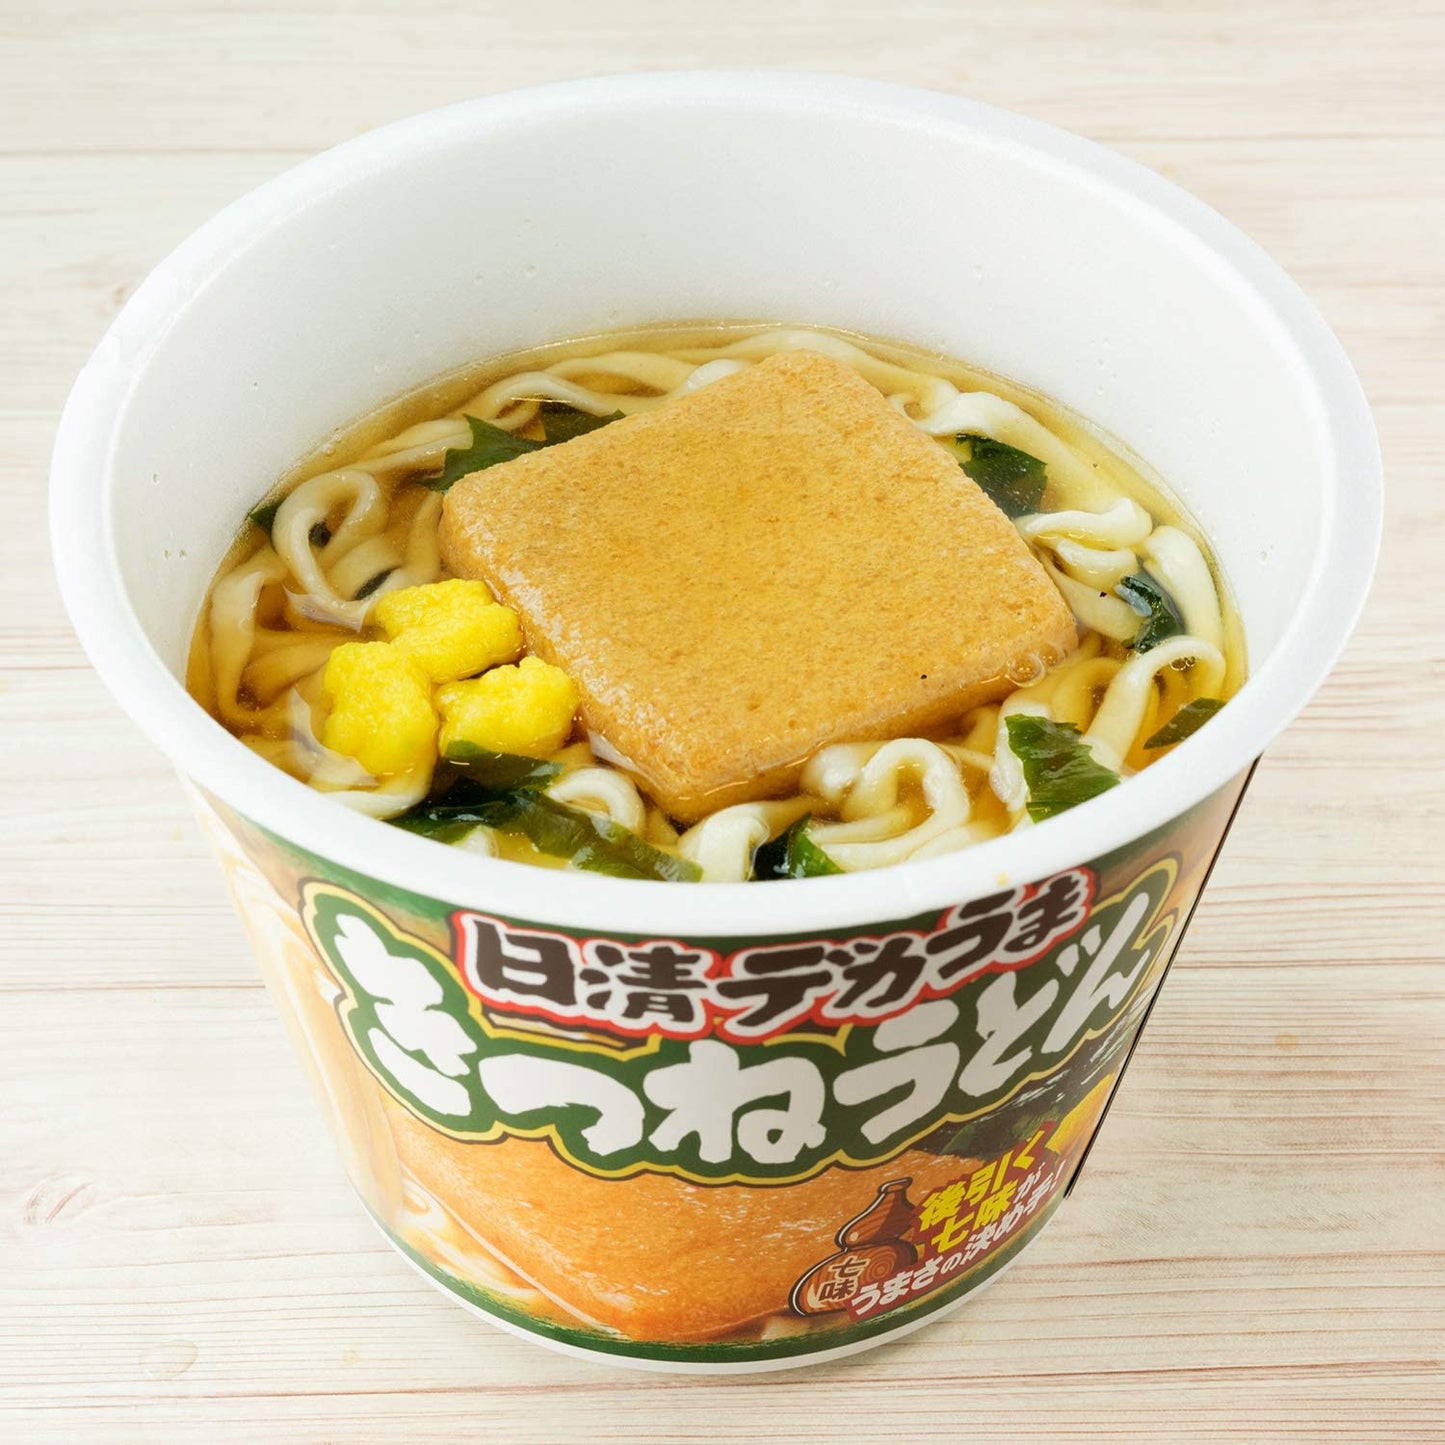 NISSIN Noodles Udon Kitsune Fried Tofu Soy Sauce Instant Soup Cup Japanese 106g